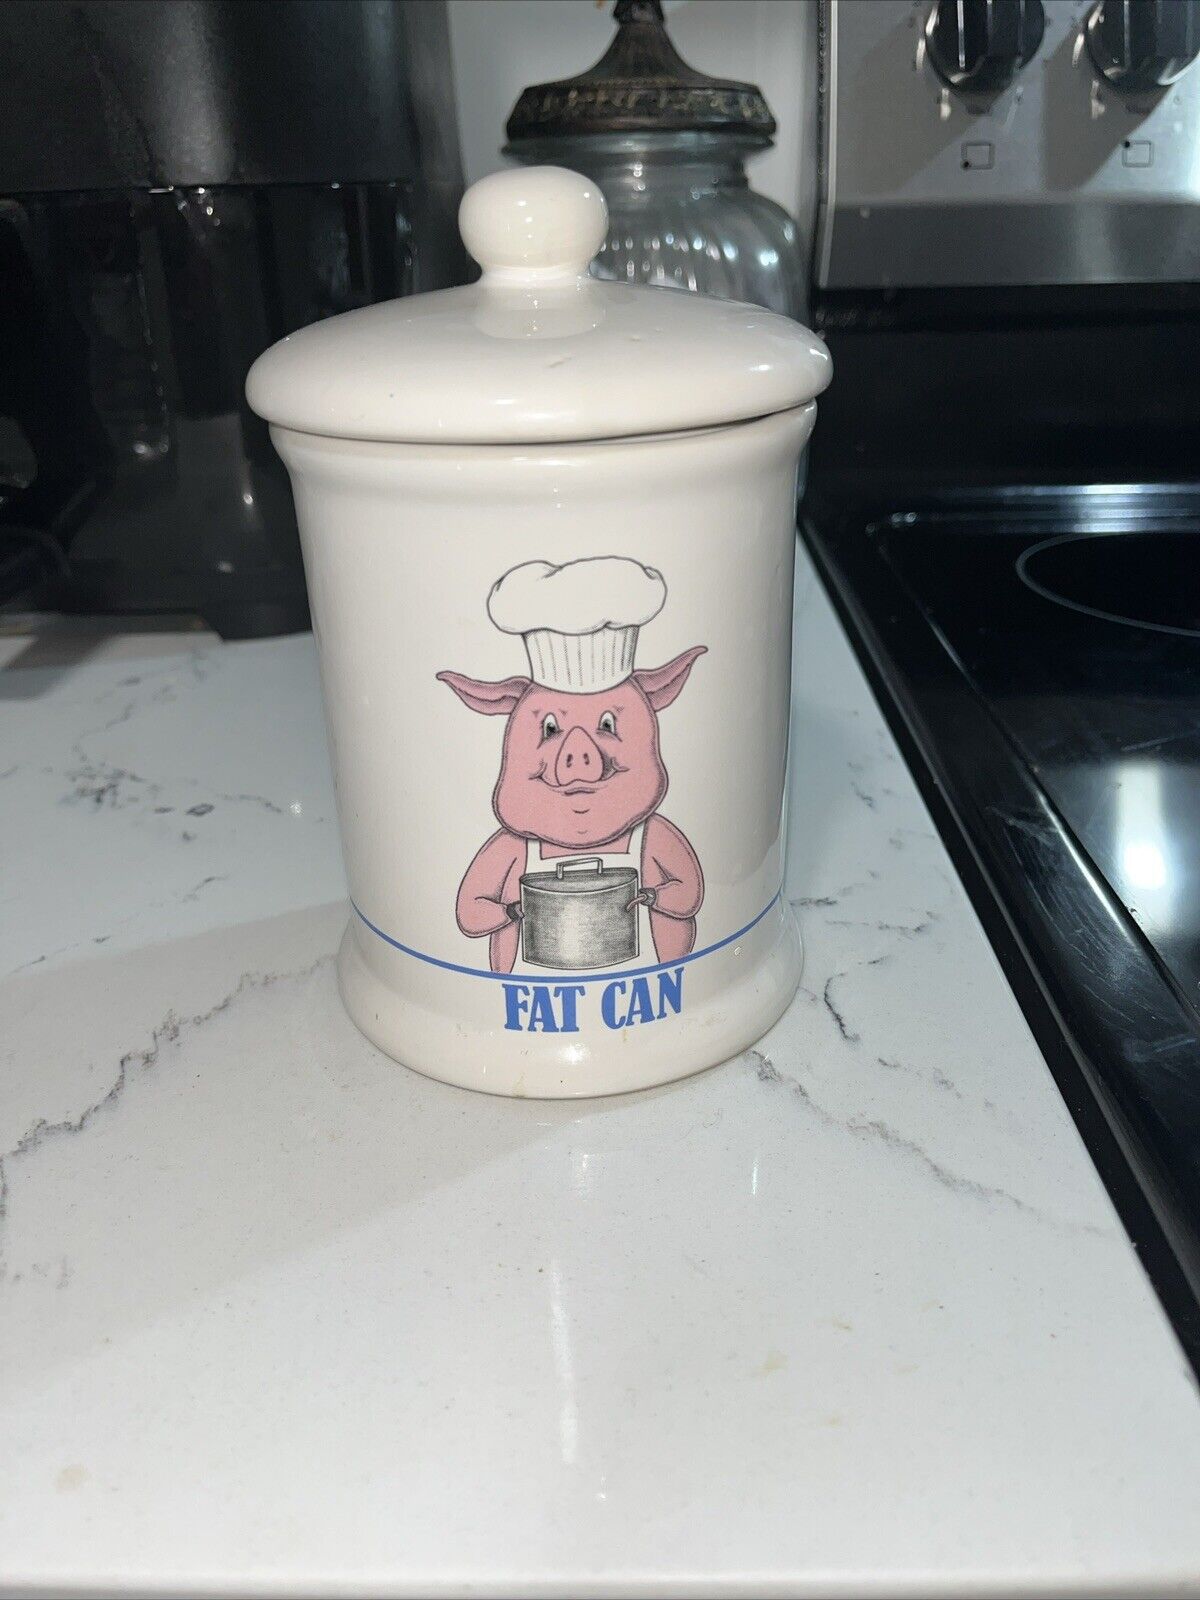 Vintage Bandwagon Fat Can Grease Jar - Great Condition (Cir. 1989)